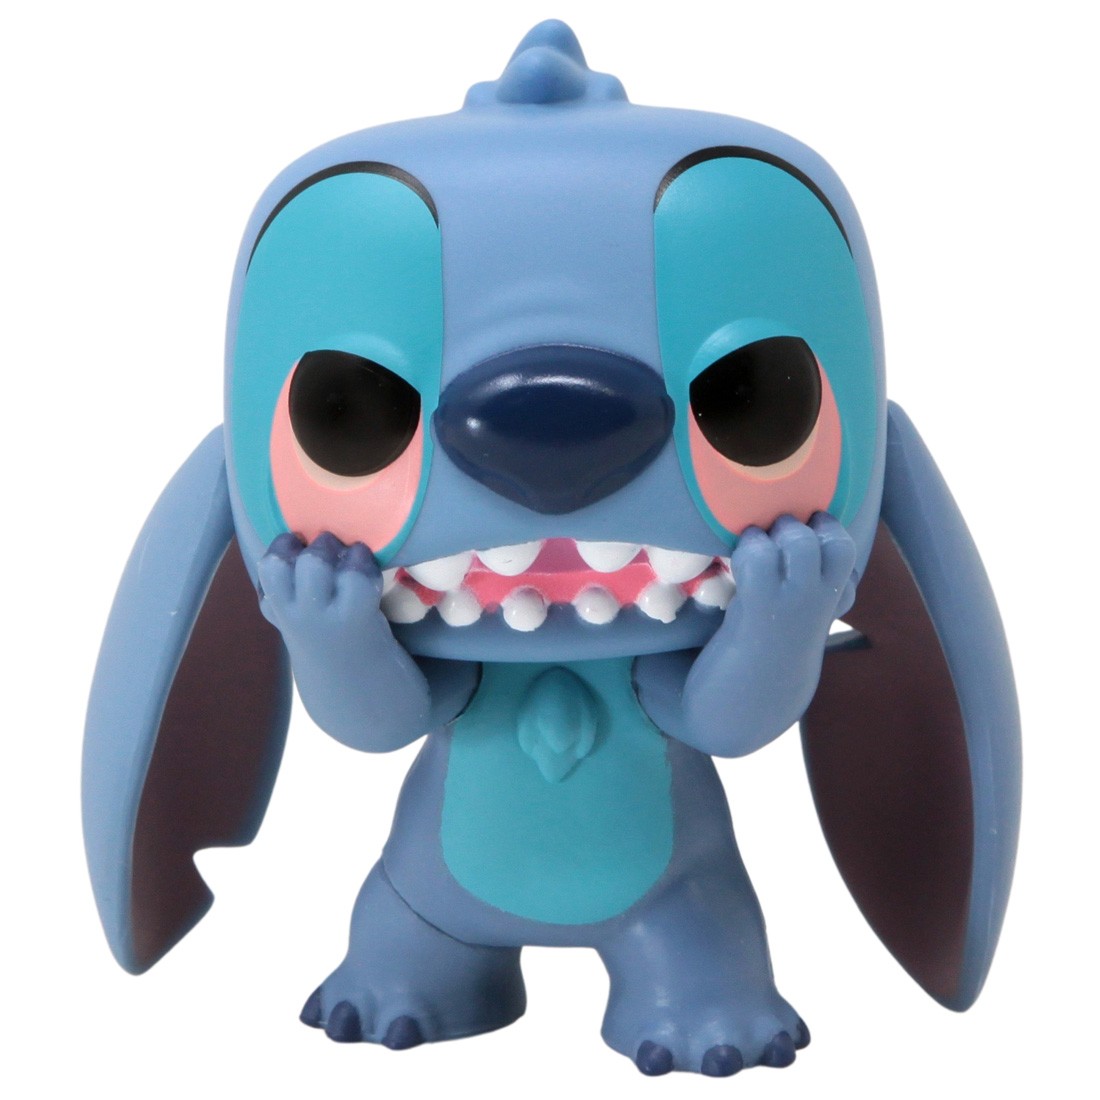 Funko Pop Disney Lilo & Stitch - Gamer Stitch EXCLUSIVE Special